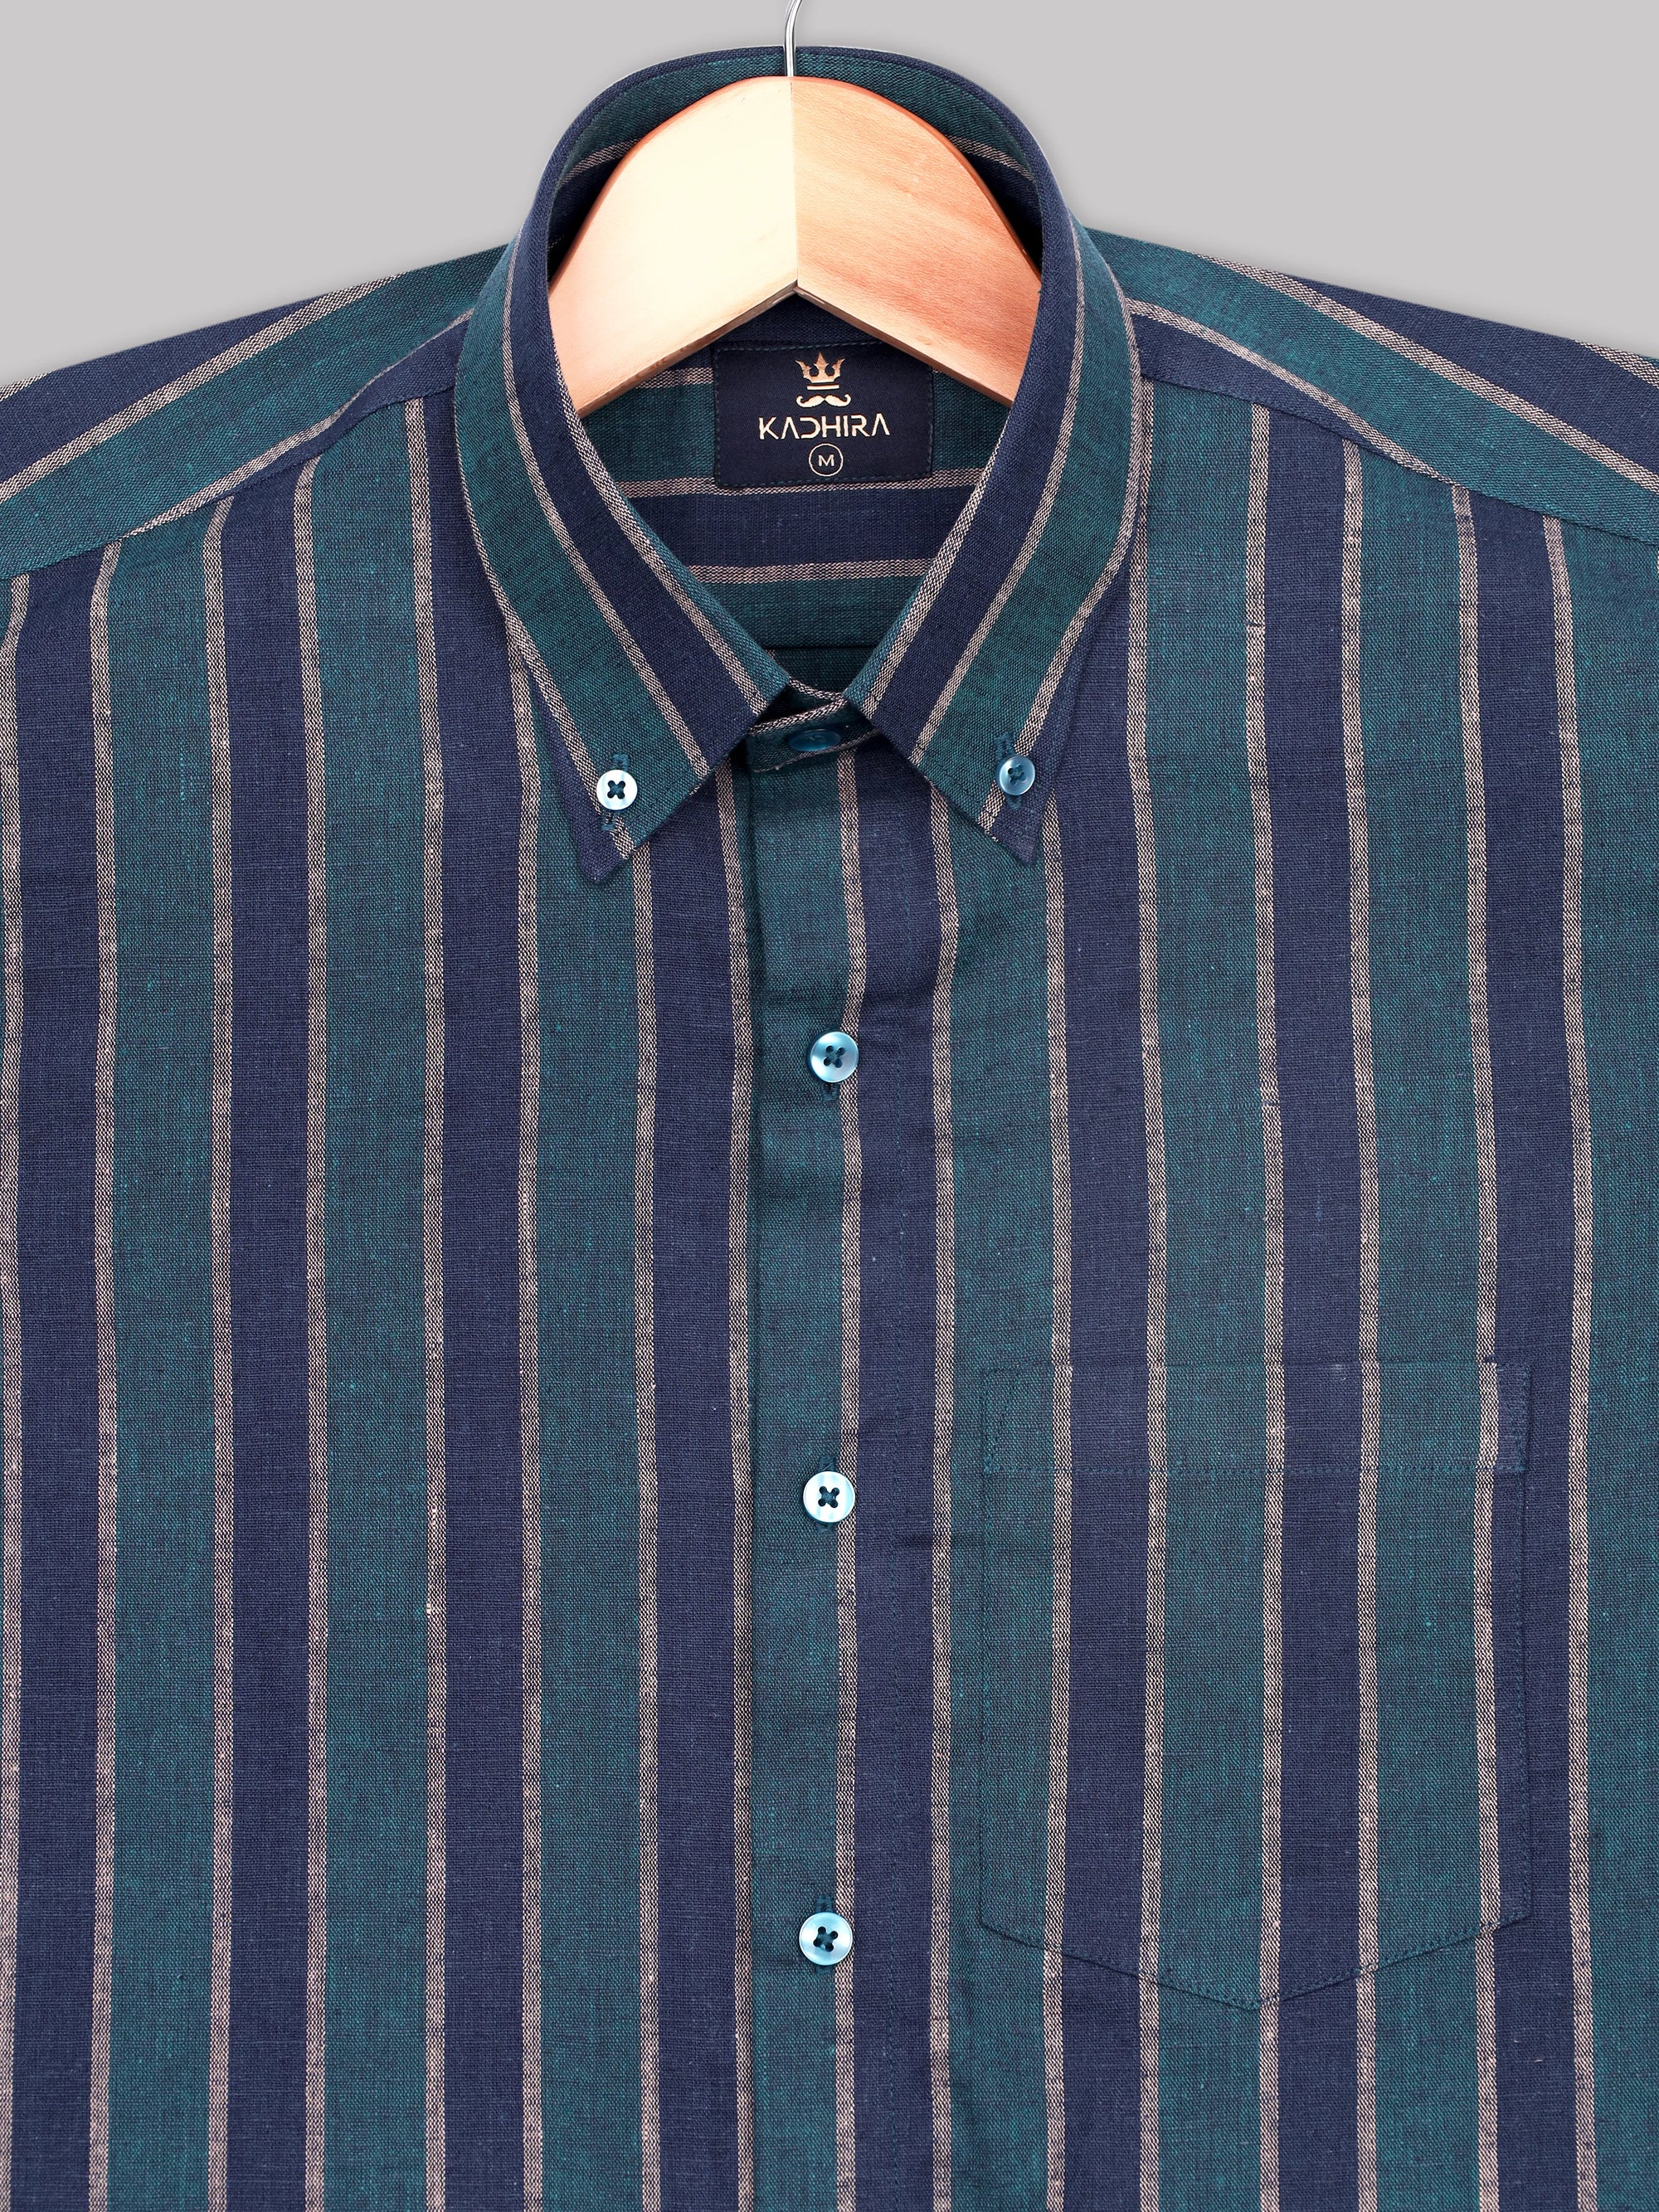 Admiral Blue With Green Stripe Premium Cotton Shirt-[ON SALE]